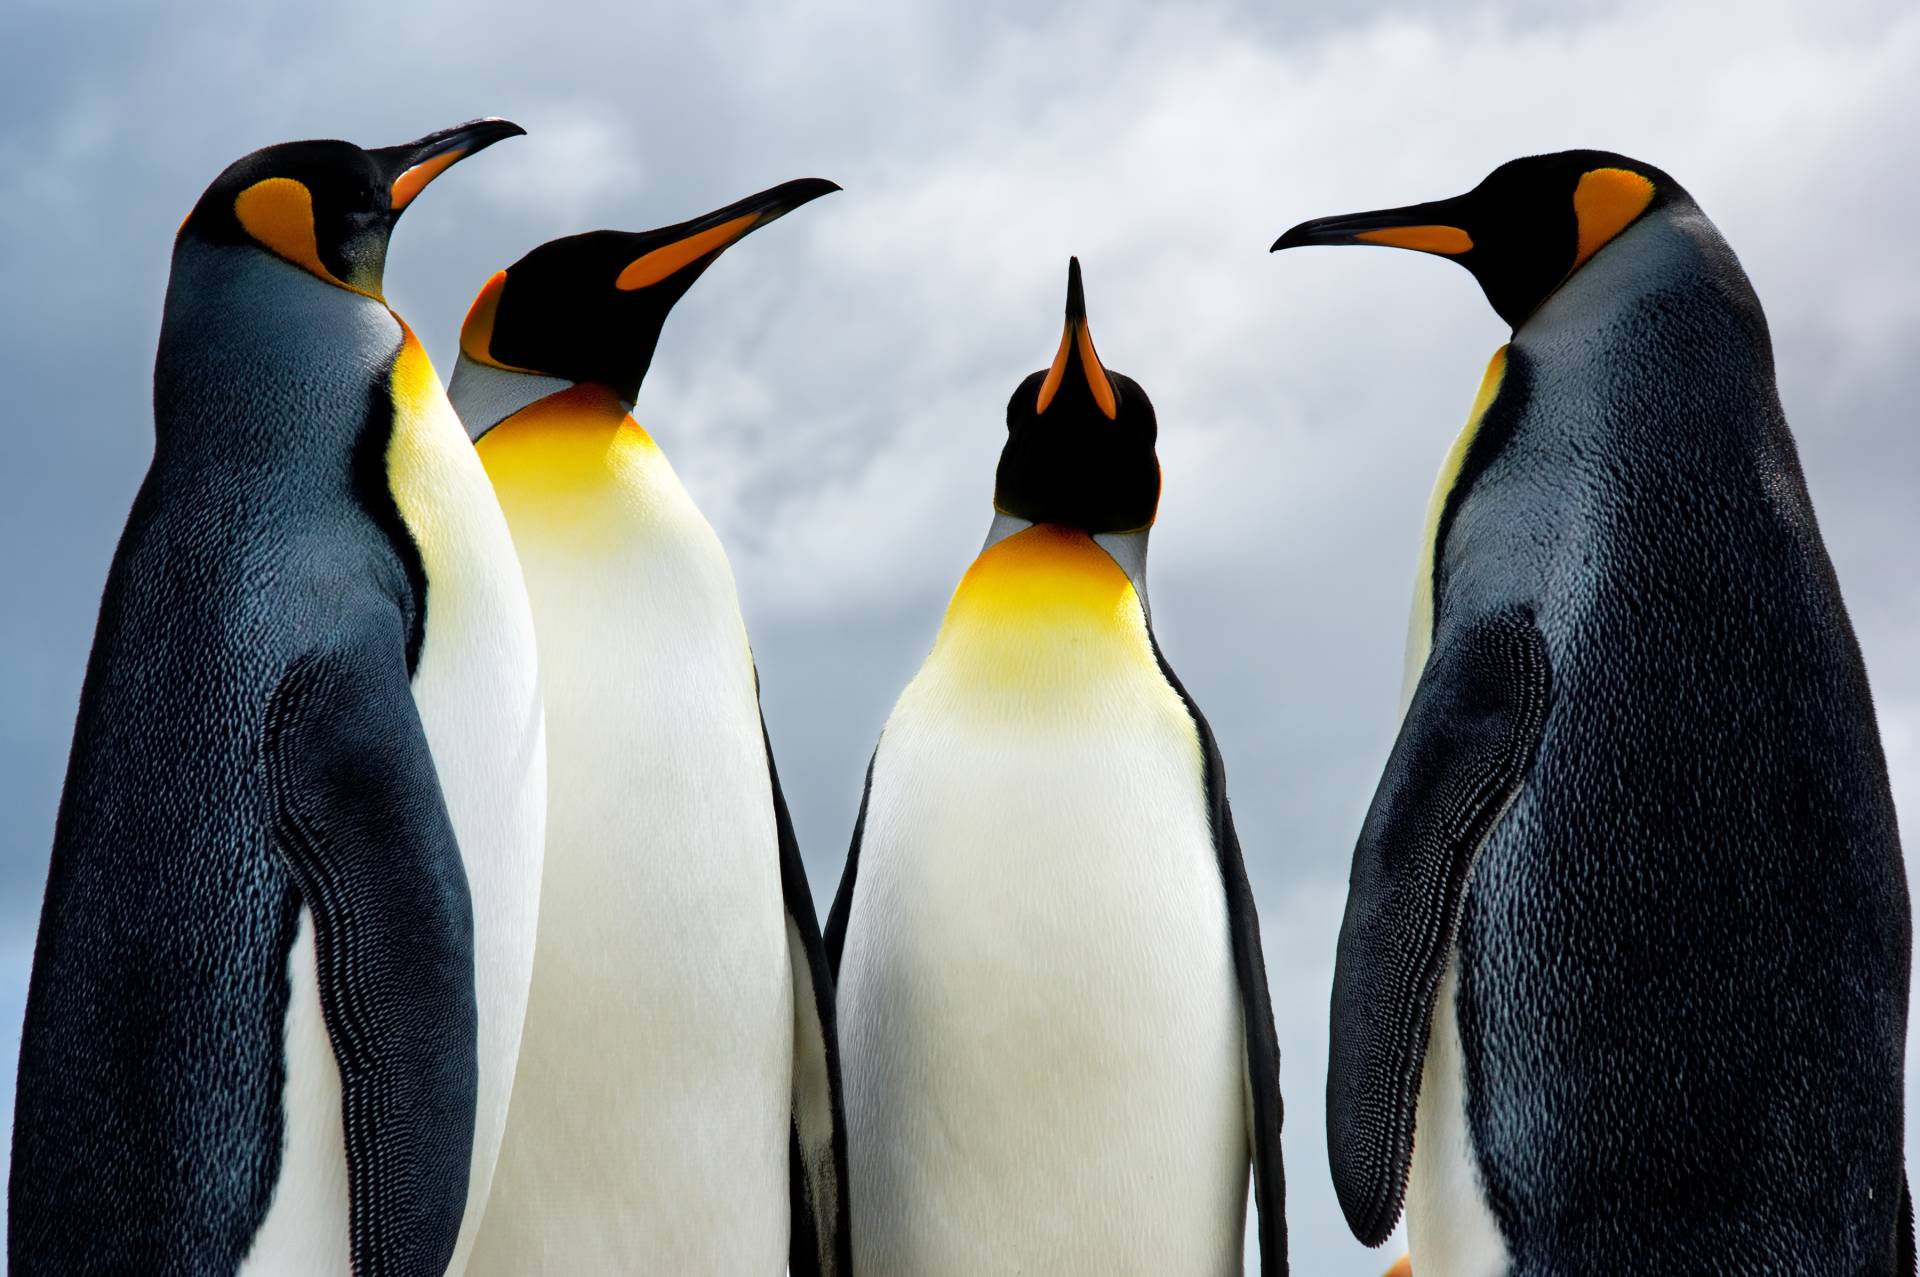 Papermoon Fototapete »King Pinguins« von Papermoon